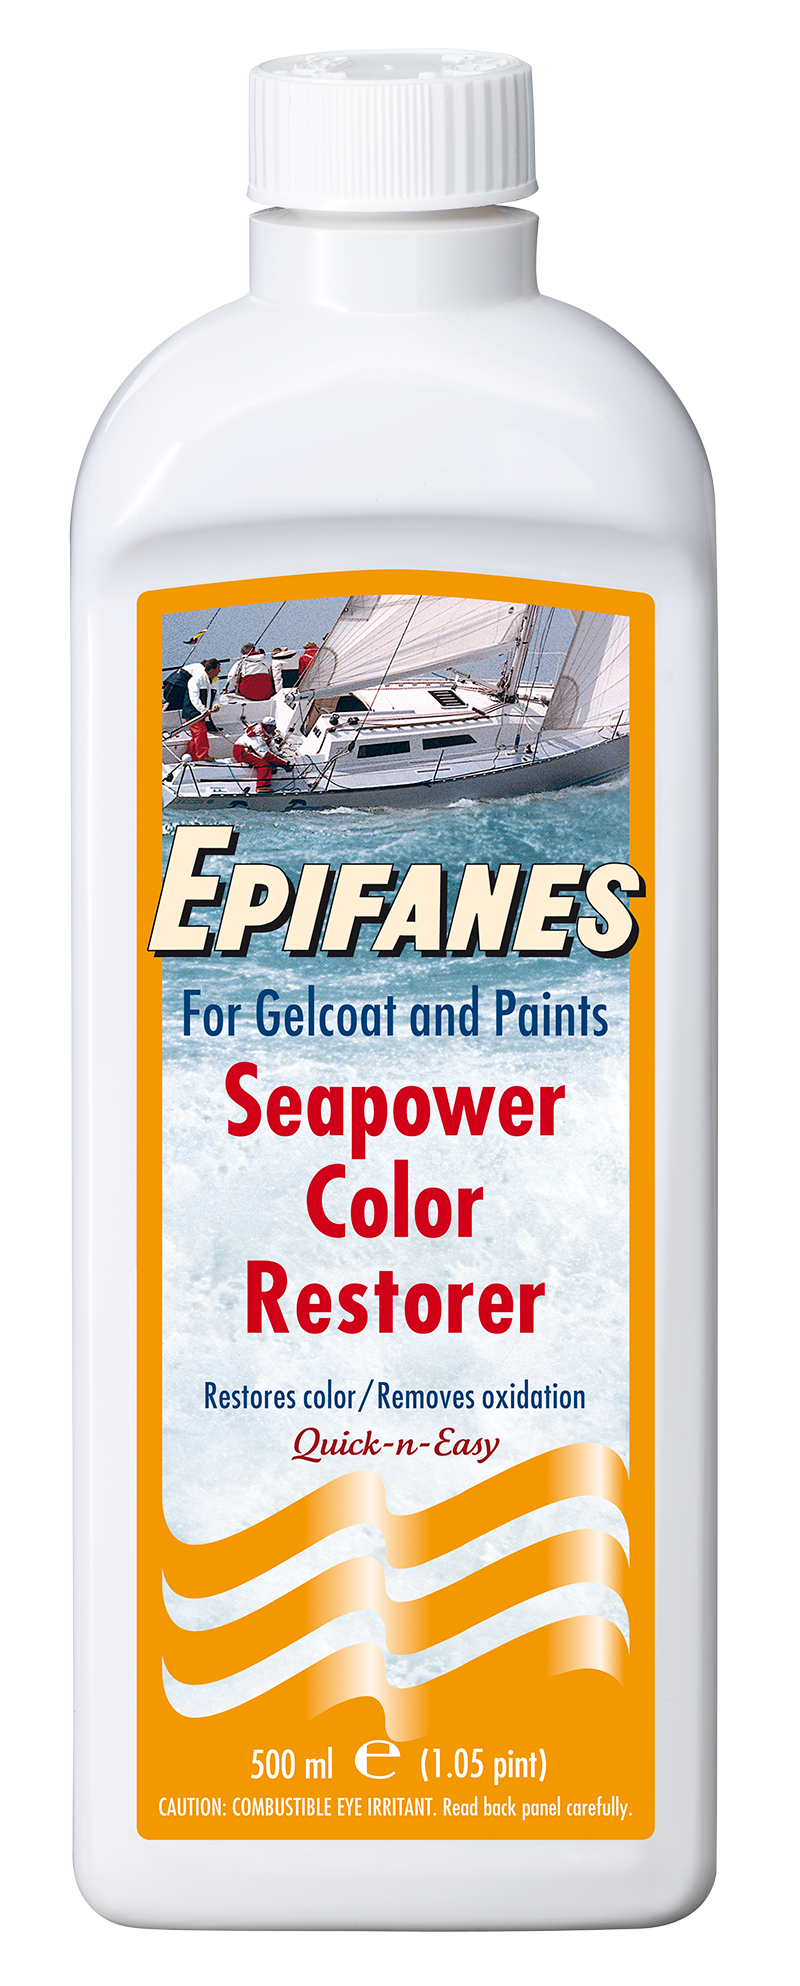 Epifanes Seapower Colour Restorer Removes oxidation & Restores color ESPCR/500 